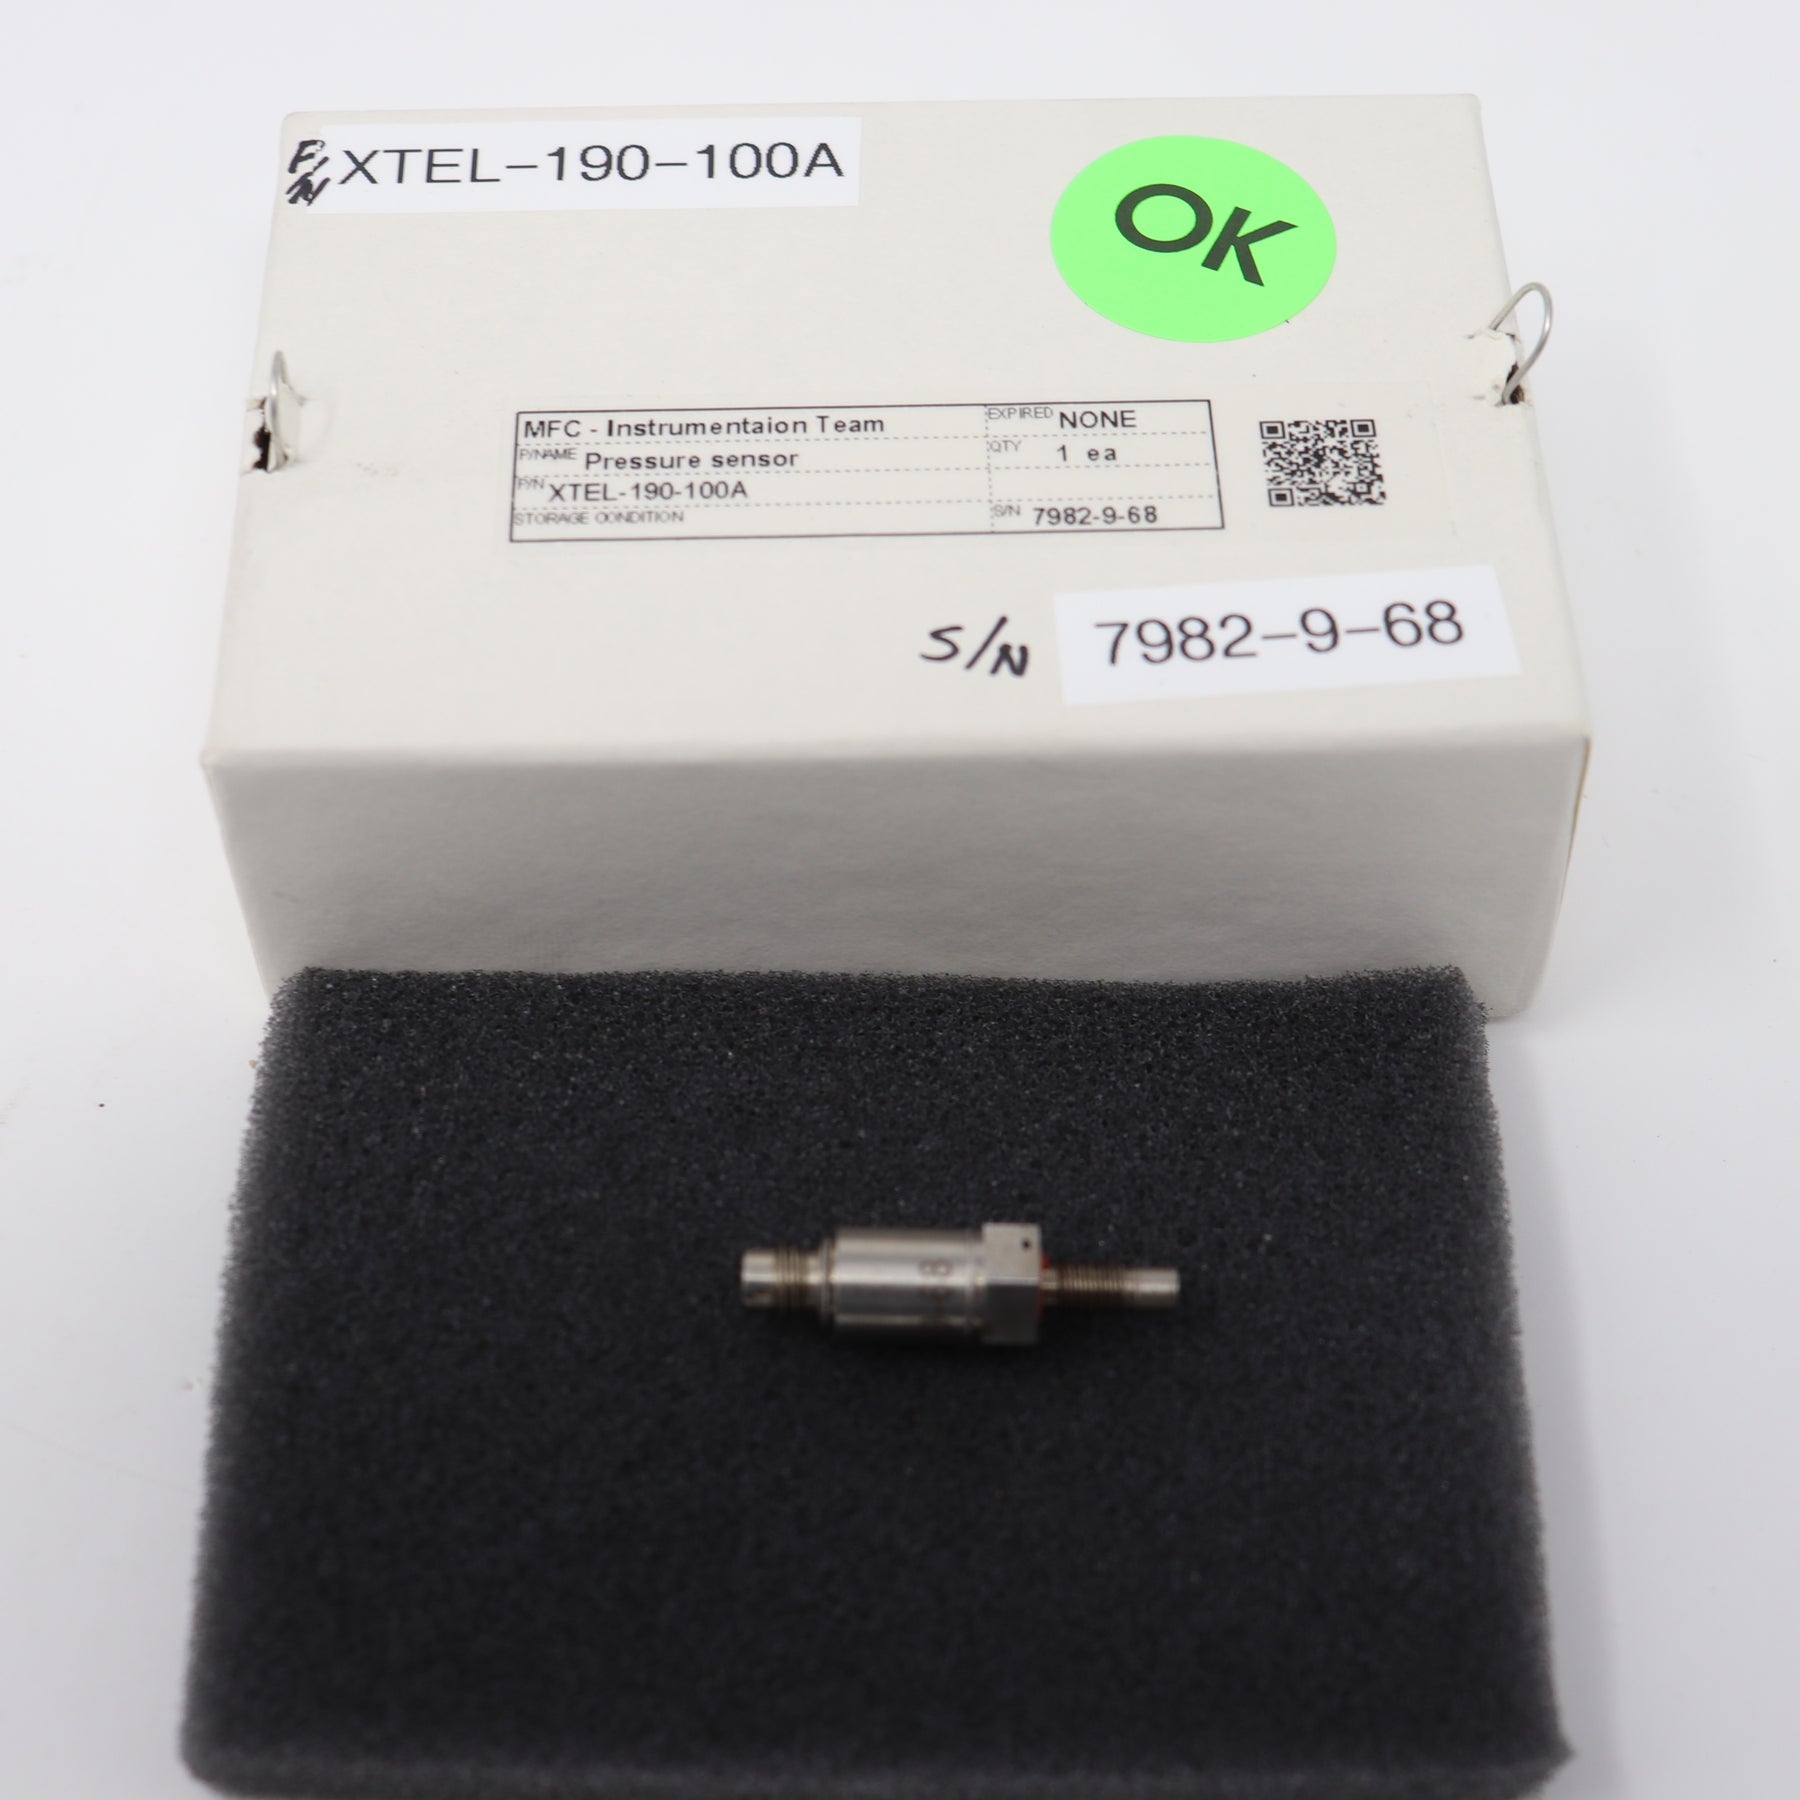 Kulite Miniature Ruggedized High Temp Pressure Transducer XTEL-190-100A